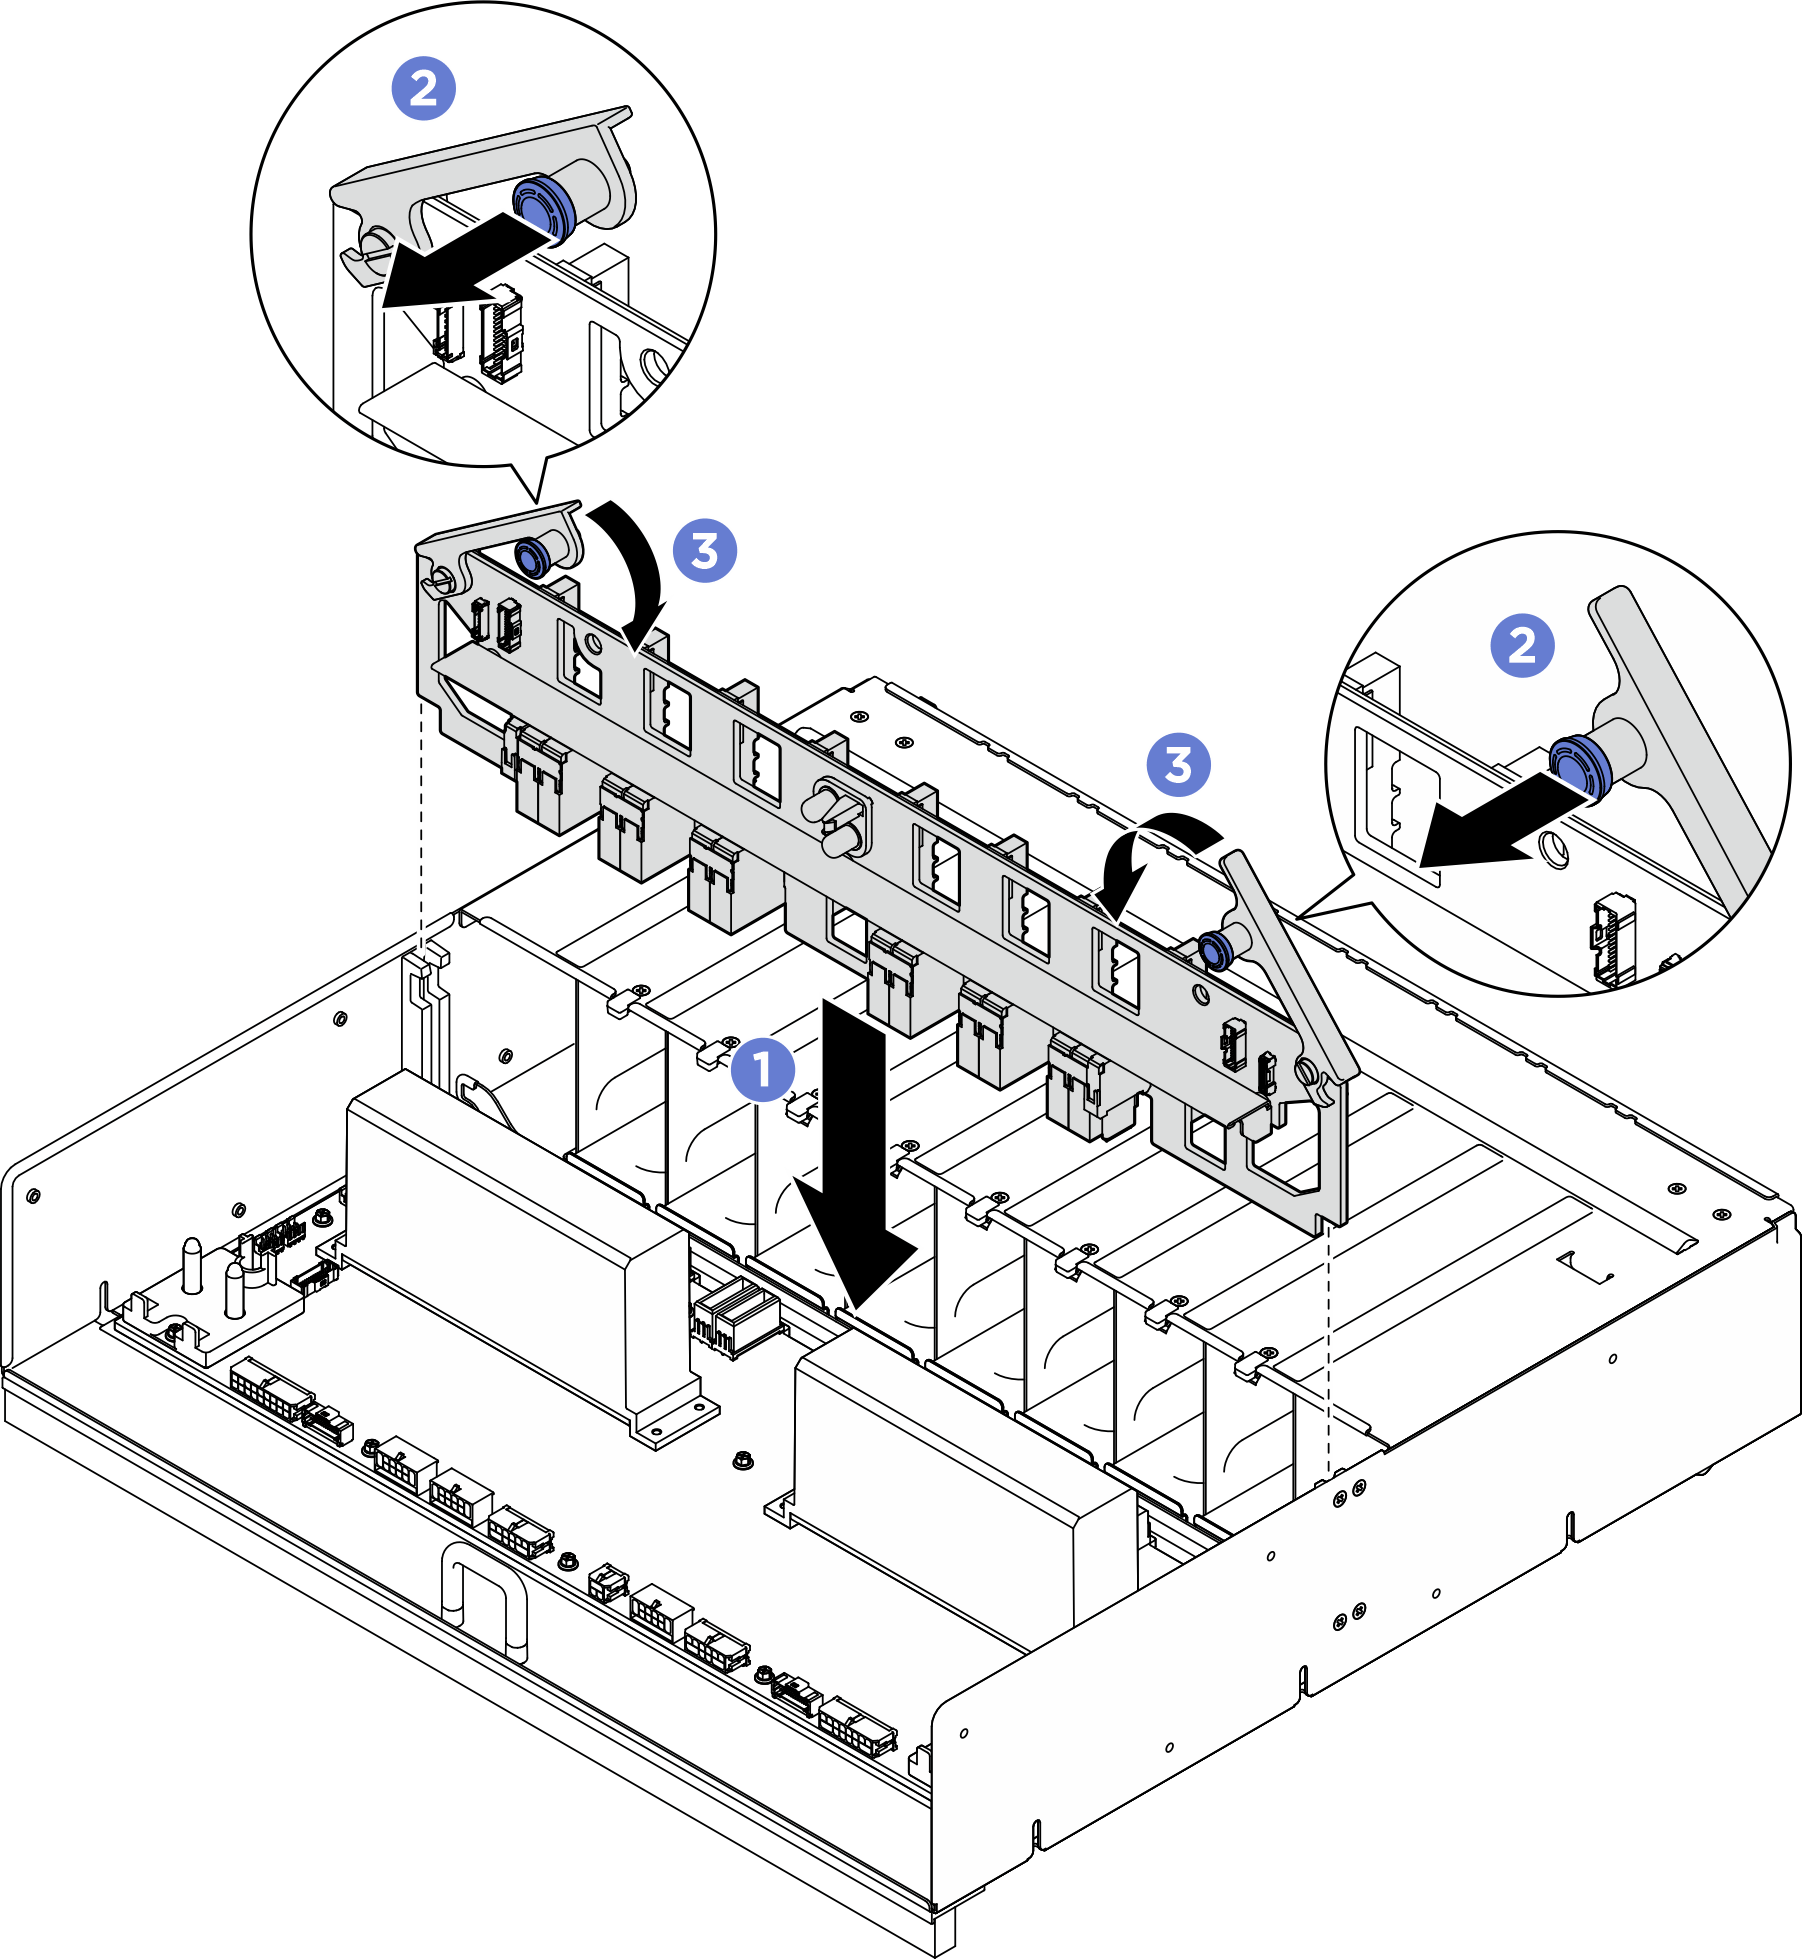 PSU-Interposer installation